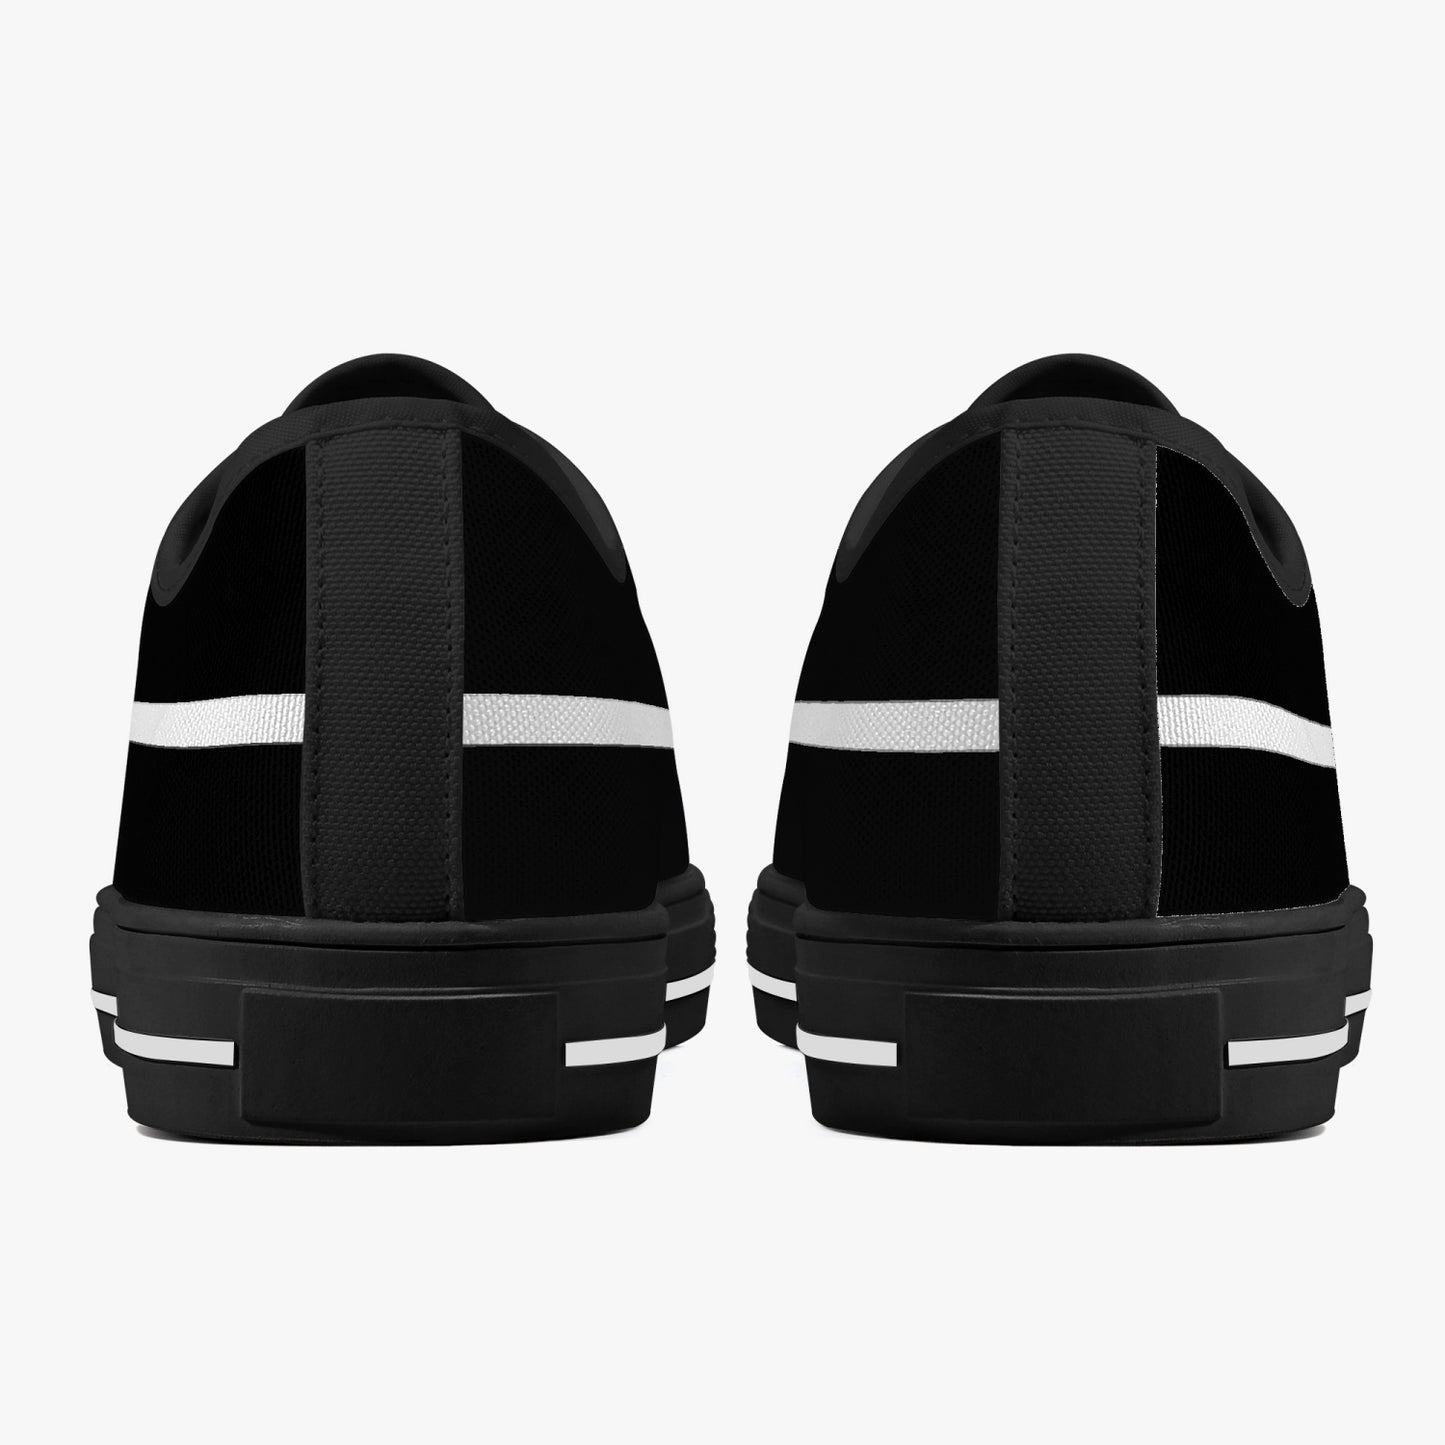 Chaussures basses Fribourg - noir Hommes/Femmes